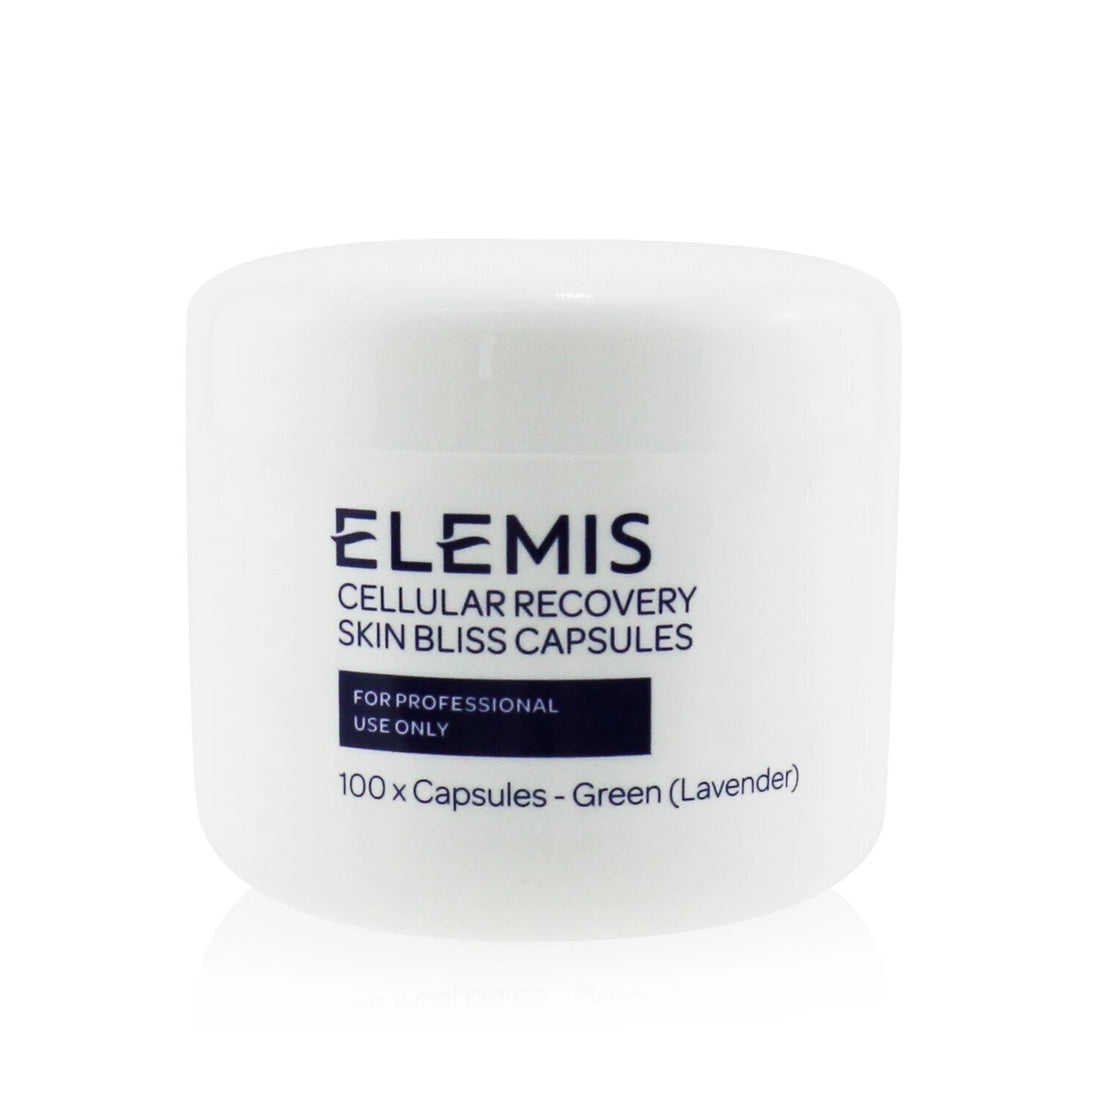 Elemis Cellular Recovery Skin Bliss Capsules Lavande 100 capsules